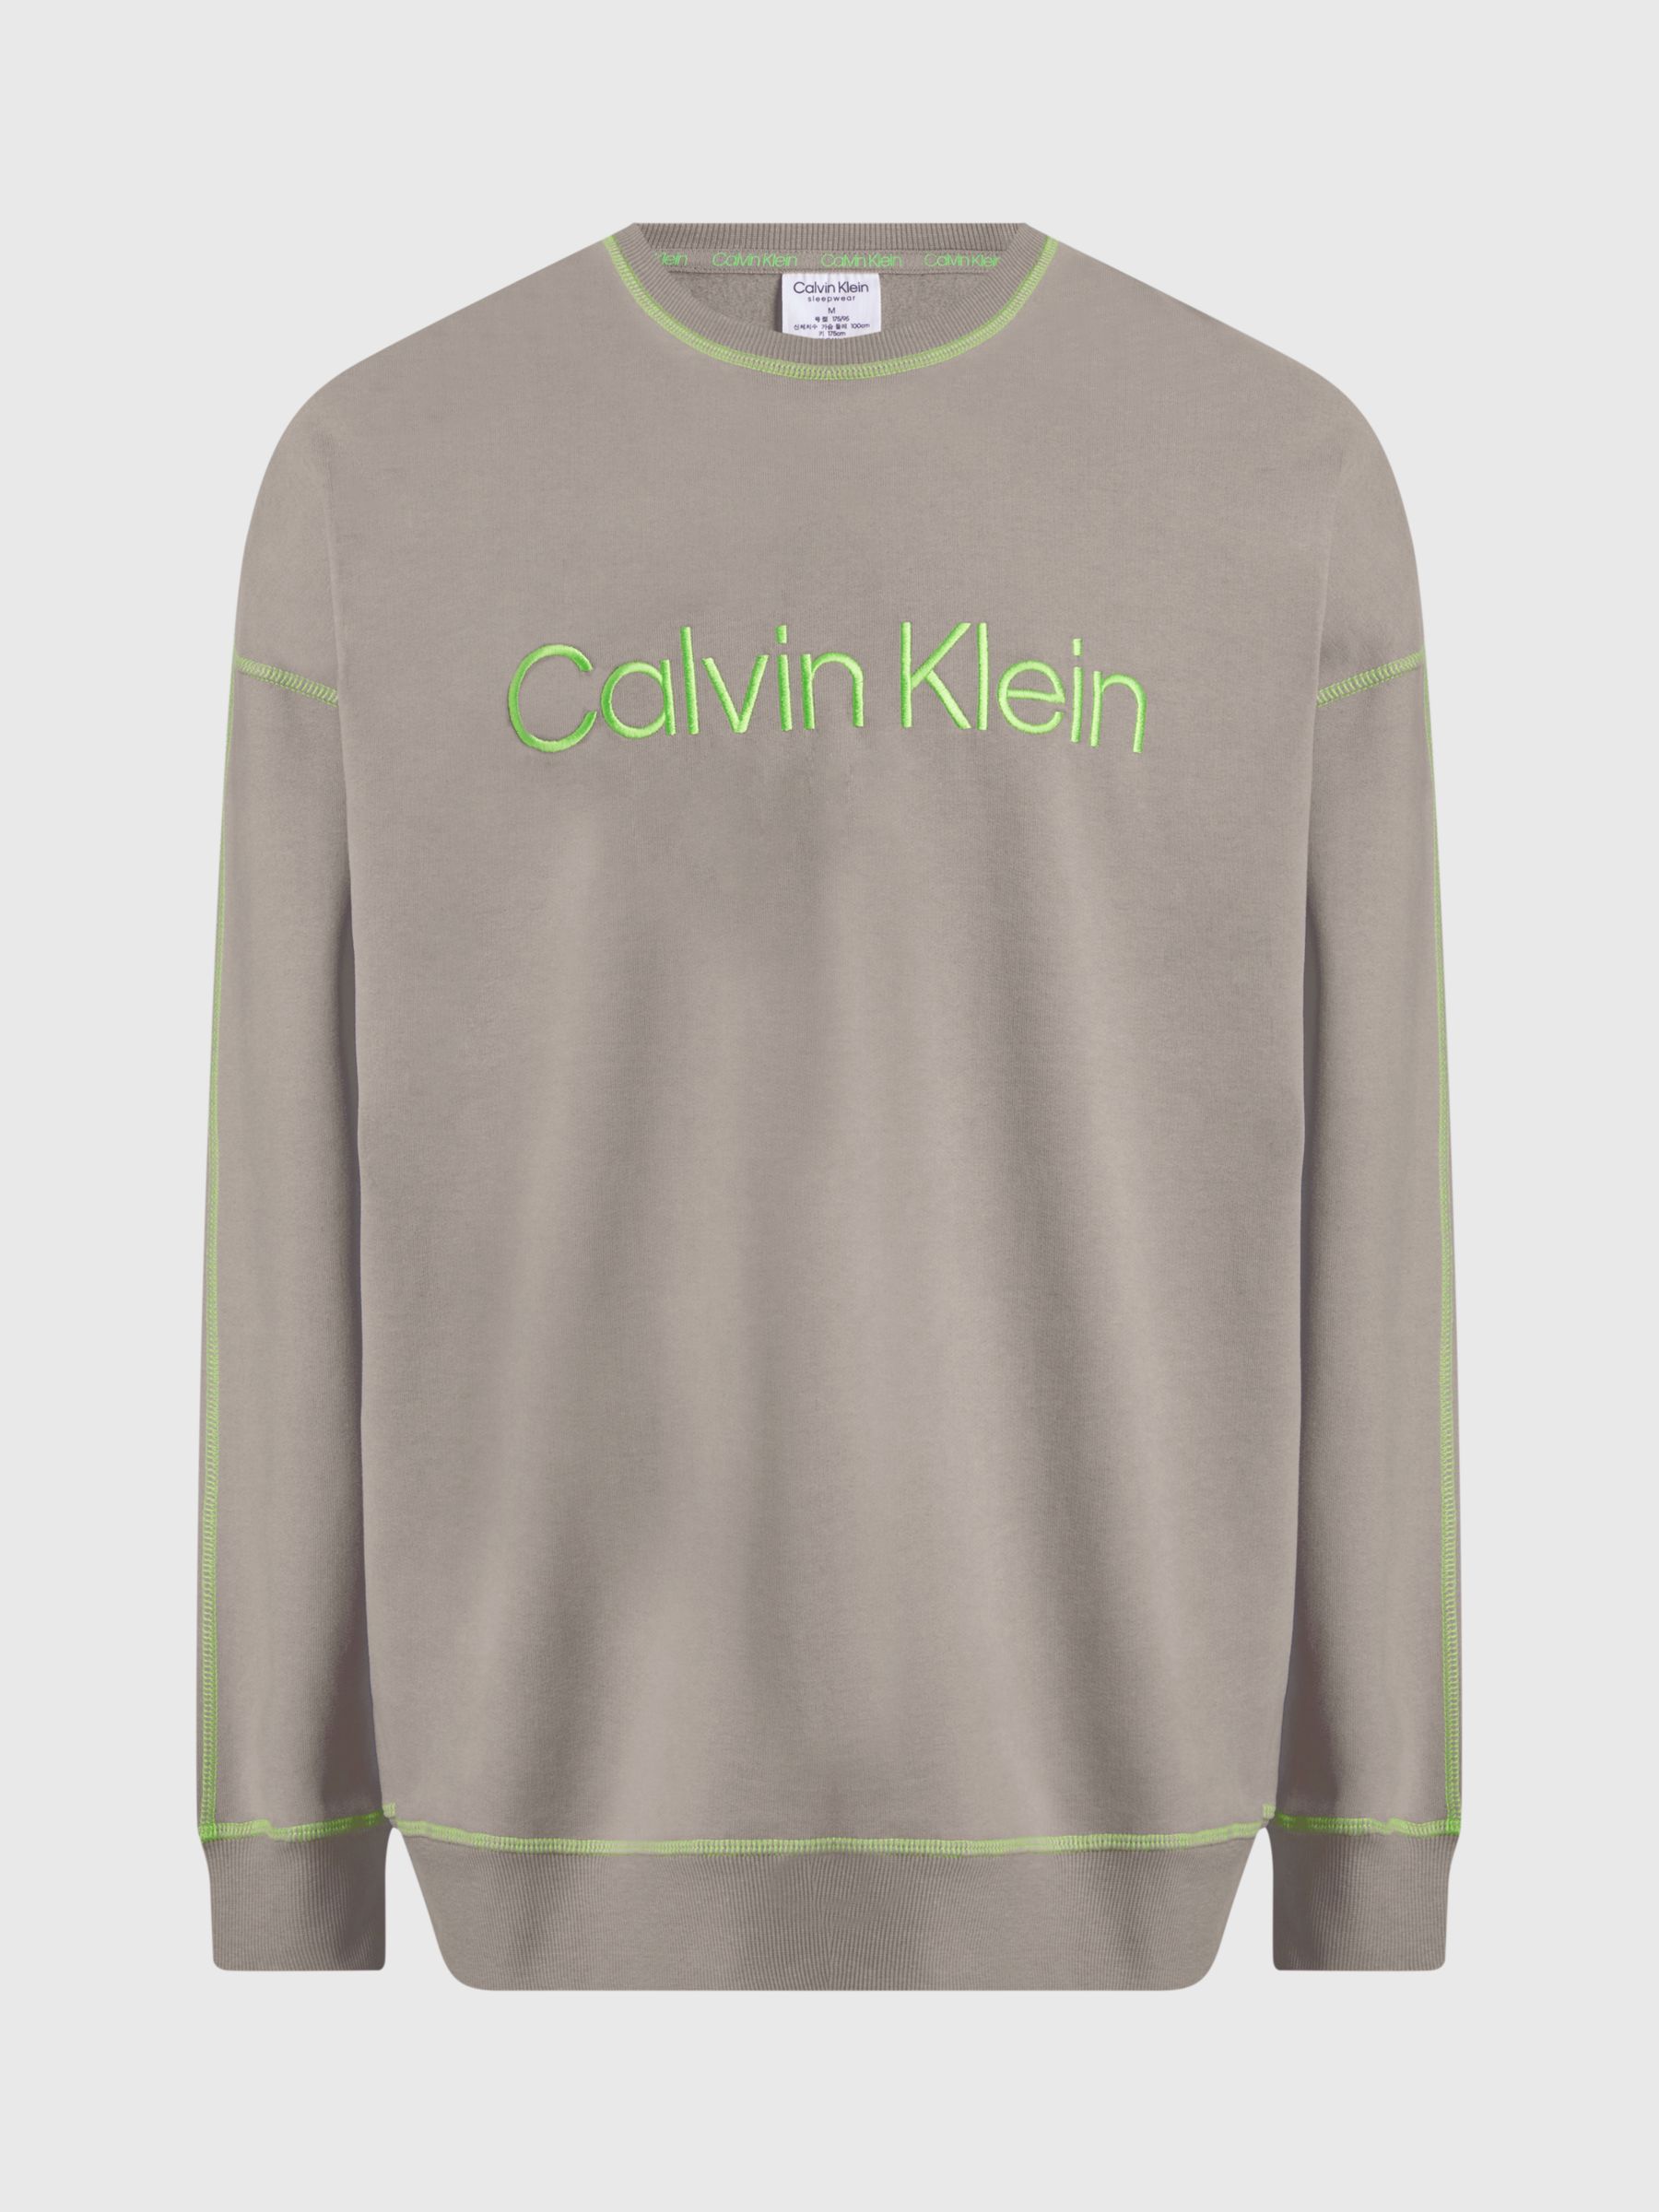 Calvin Klein Future Shift Loungewear Jumper, Satellite Grey, S